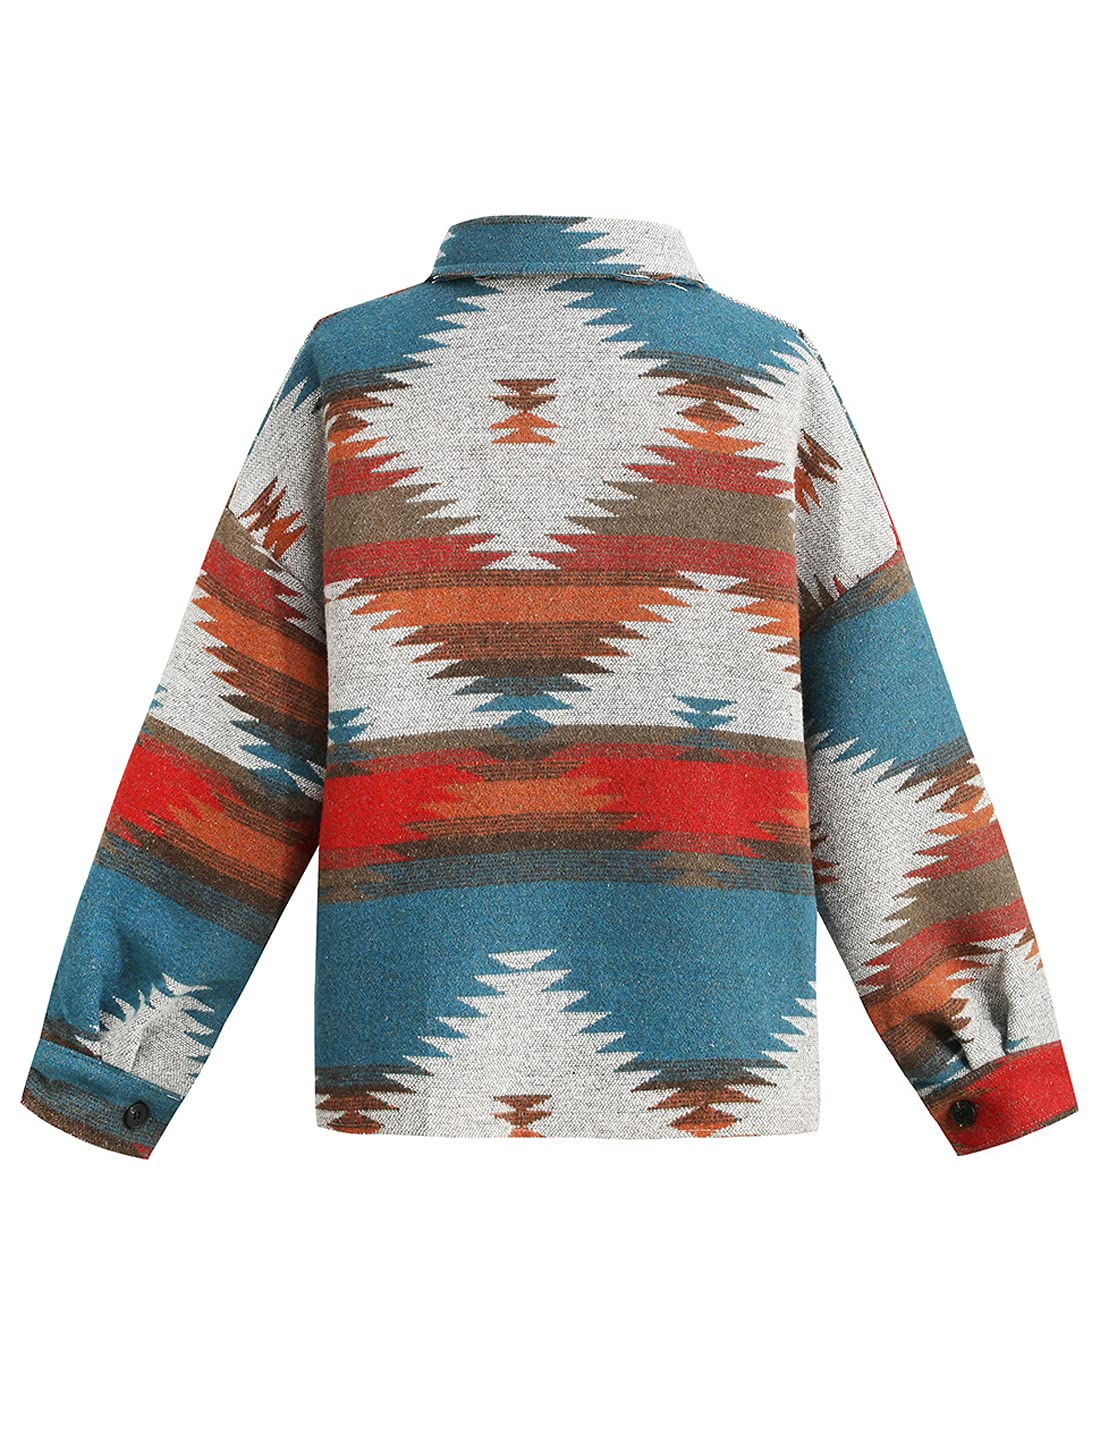 COWOKA Women's Vintage Aztec Print Pattern Loose Shacket Button Down Long Sleeve Woolen Jacket Shirts Coat